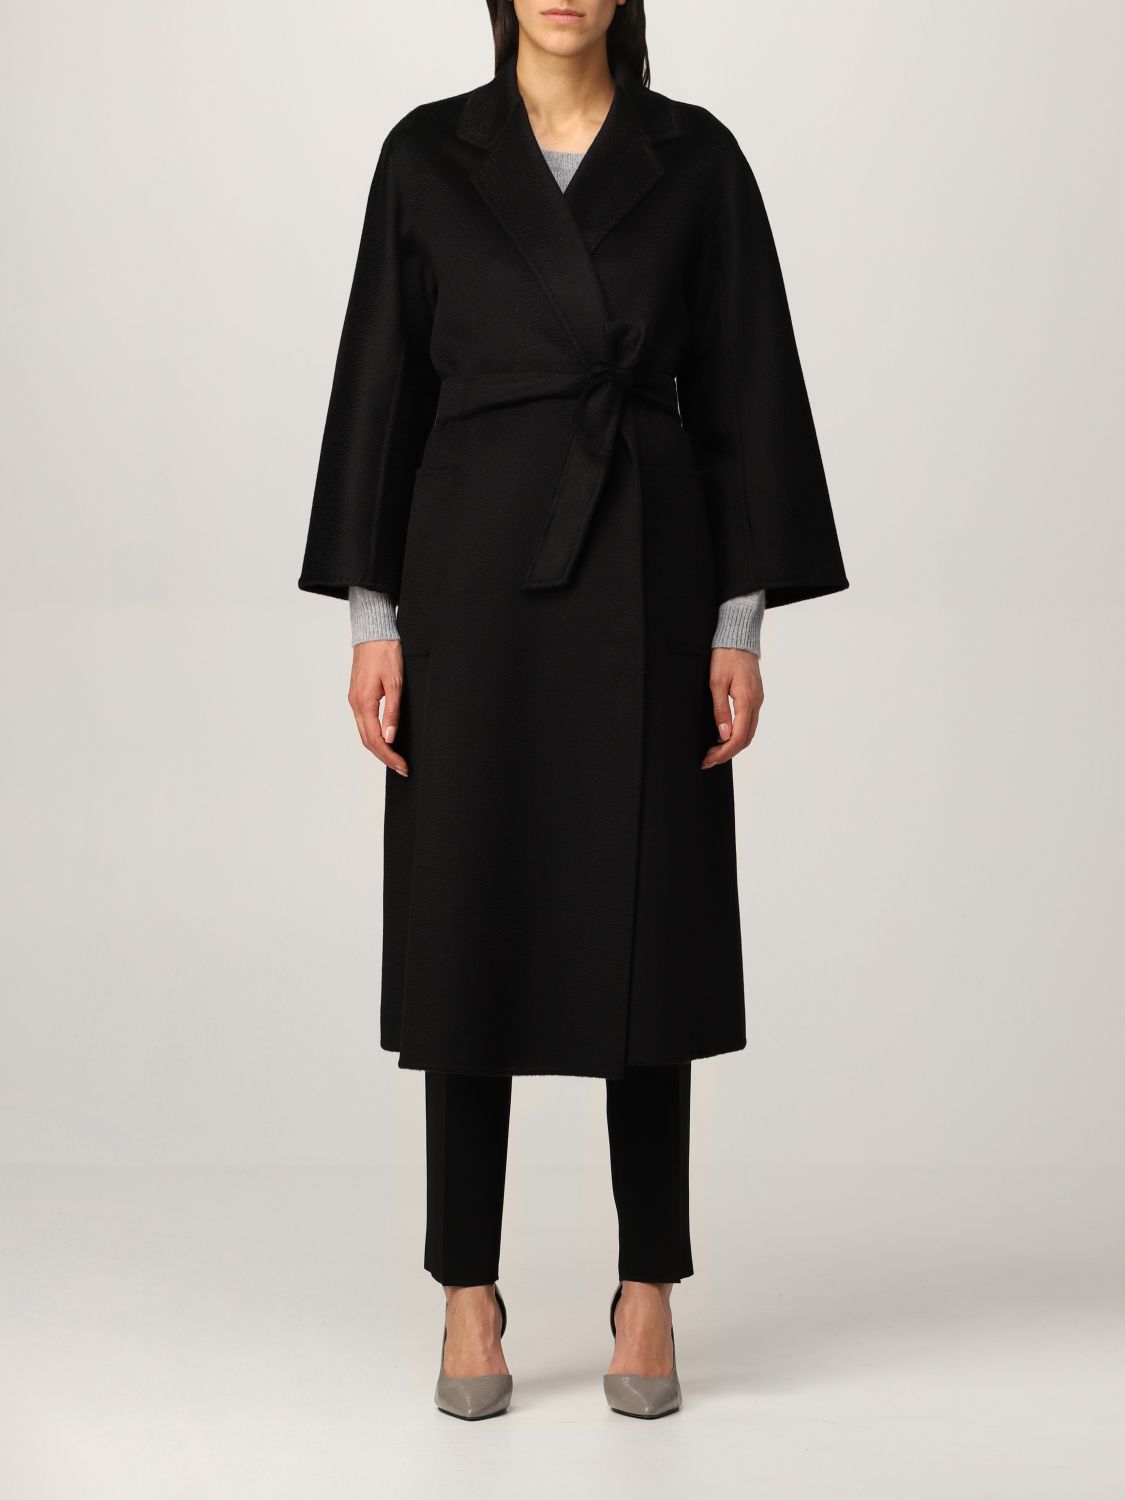 Zinloos Terugspoelen comfortabel MAX MARA: cashmere coat - Black | Max Mara coat 10160919600 online on  GIGLIO.COM